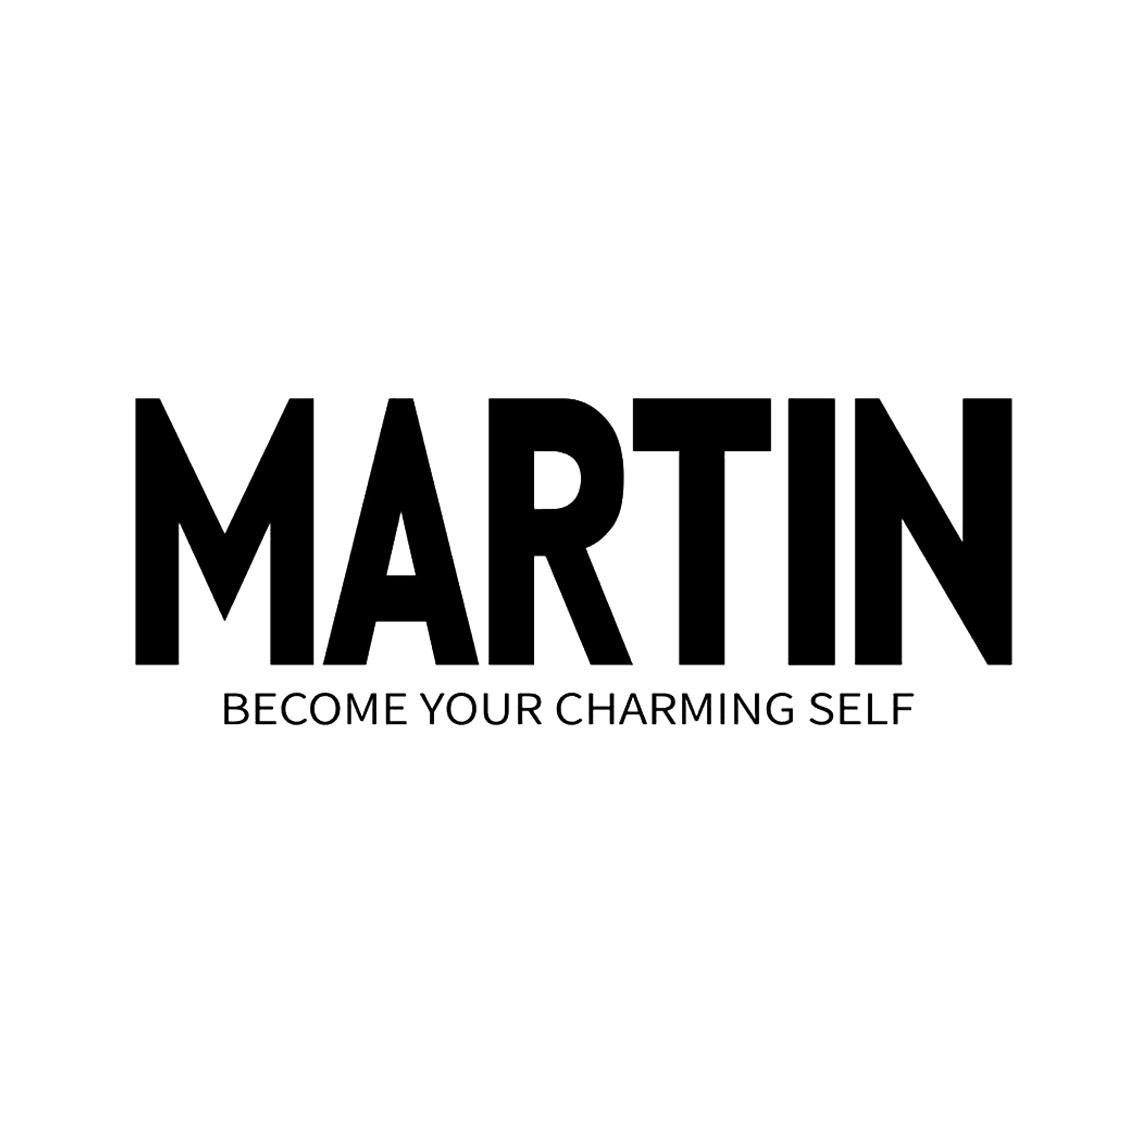 martin become your charming self